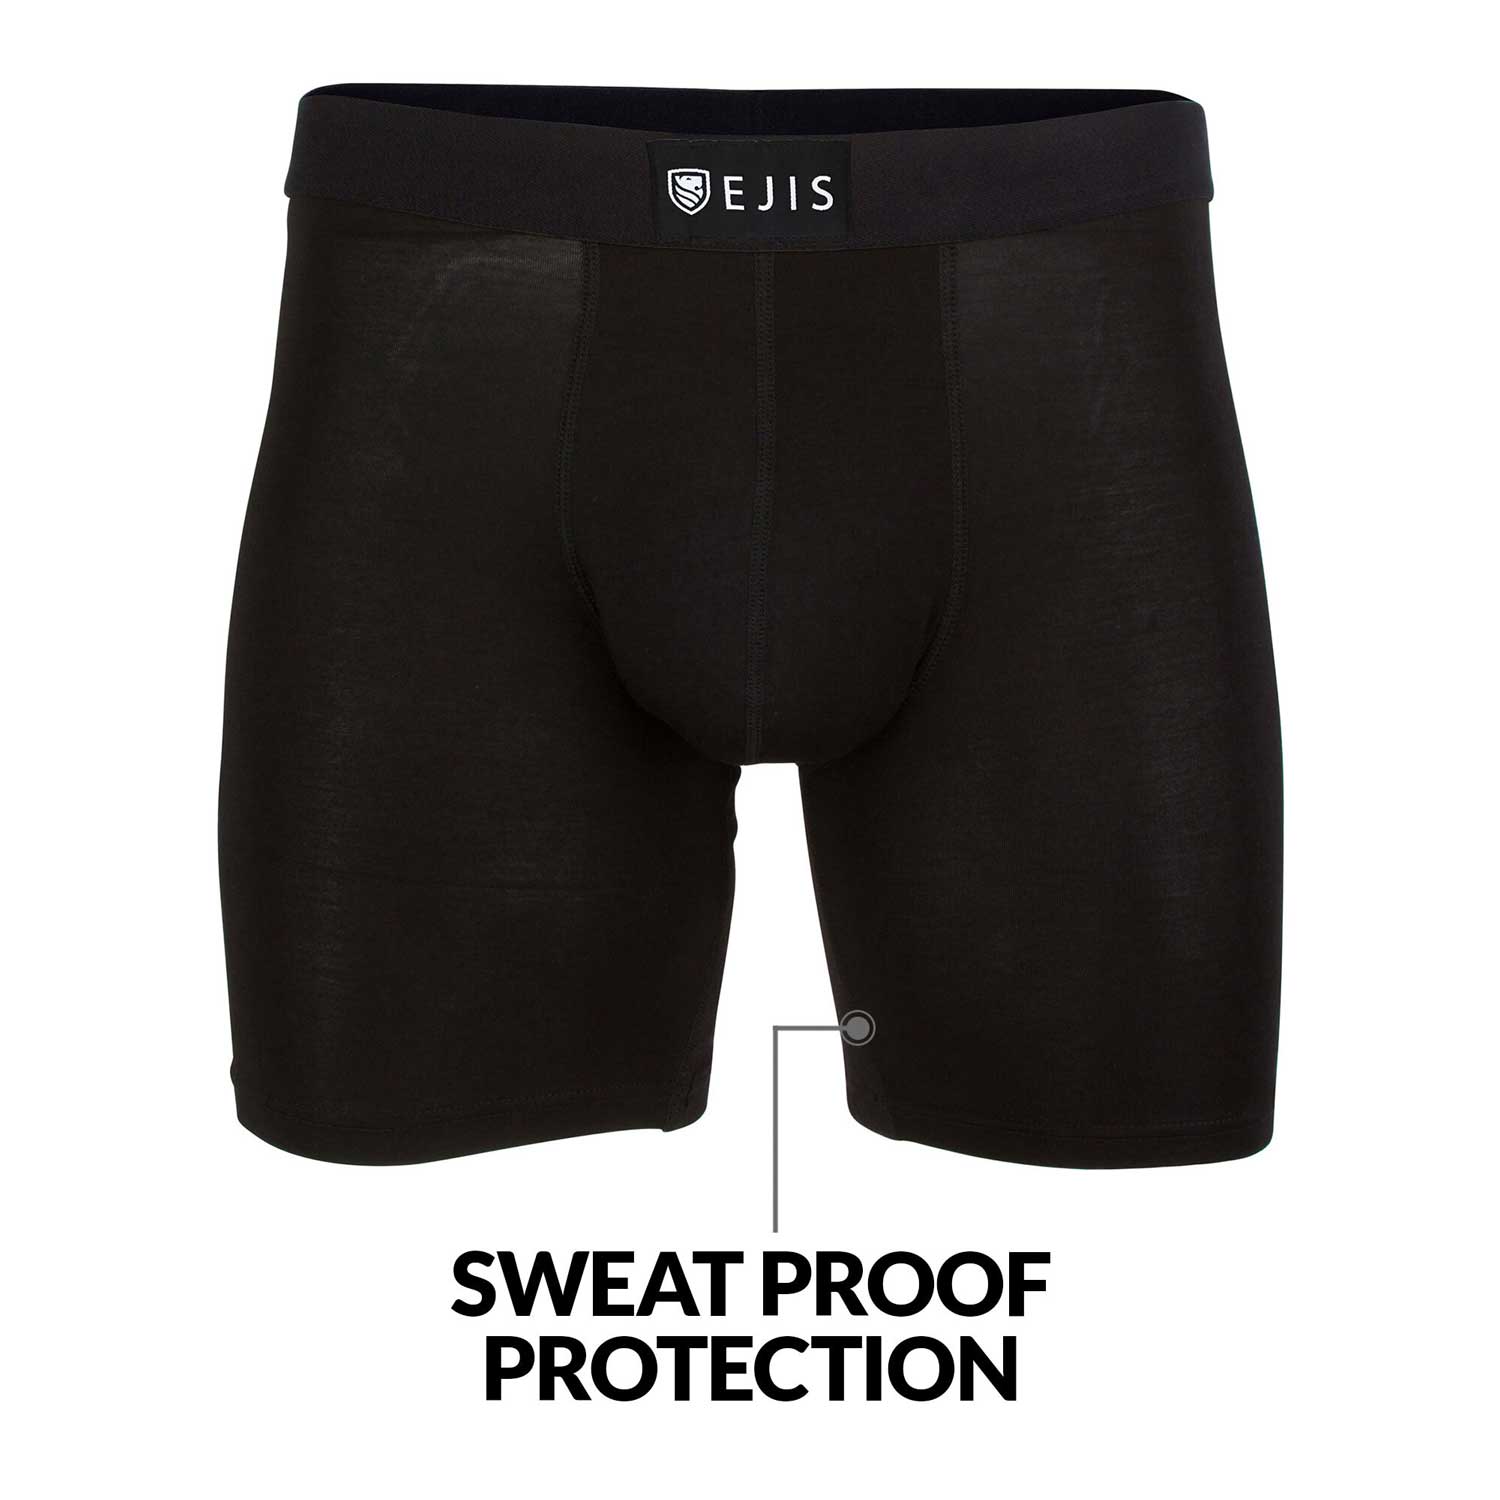 Ejis Men's Sweat Proof Boxer Briefs